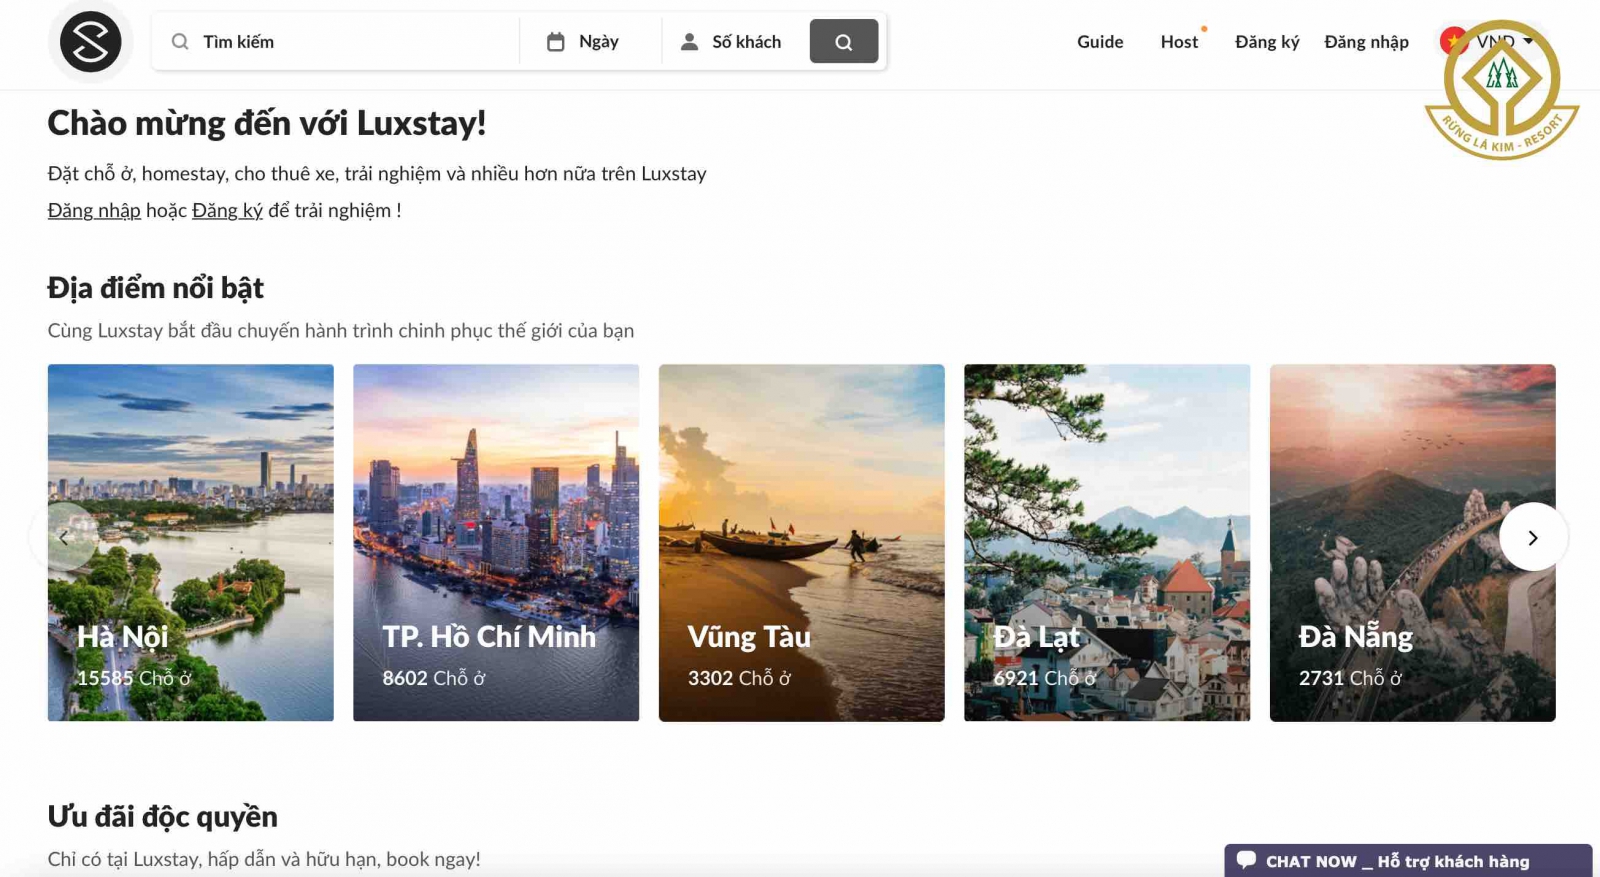 Luxstay - "Airbnb của người Việt"